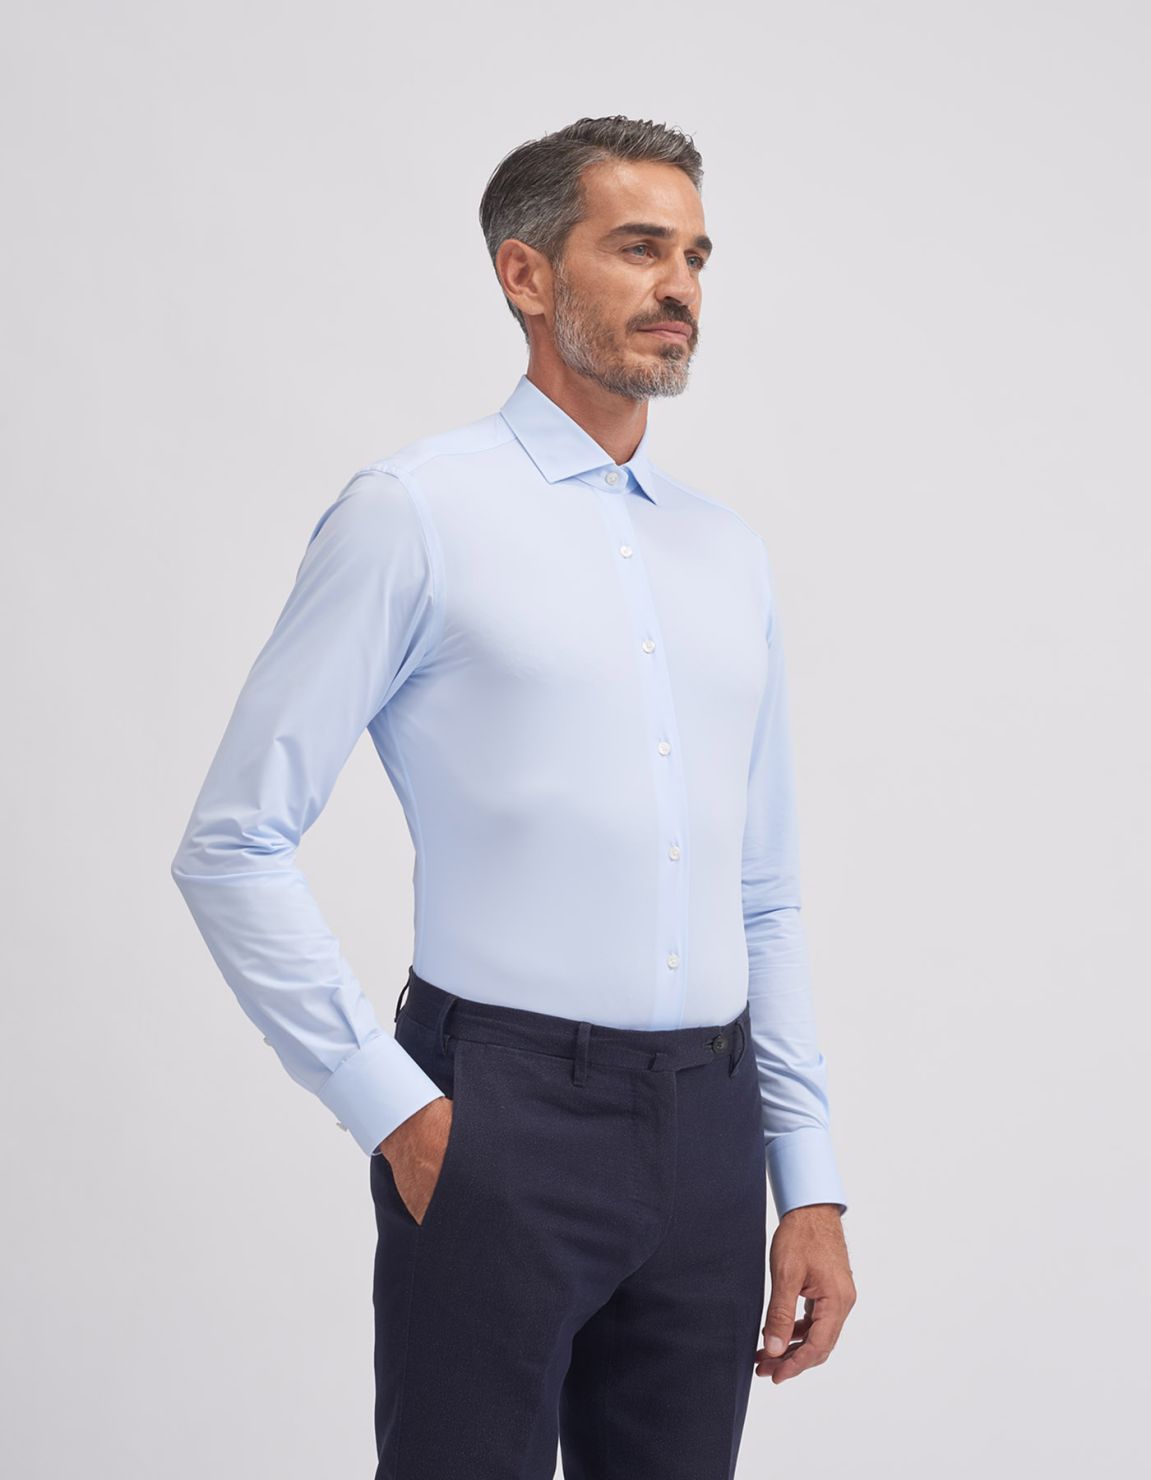 Shirt Collar small cutaway Light Blue Oxford Tailor Custom Fit 1